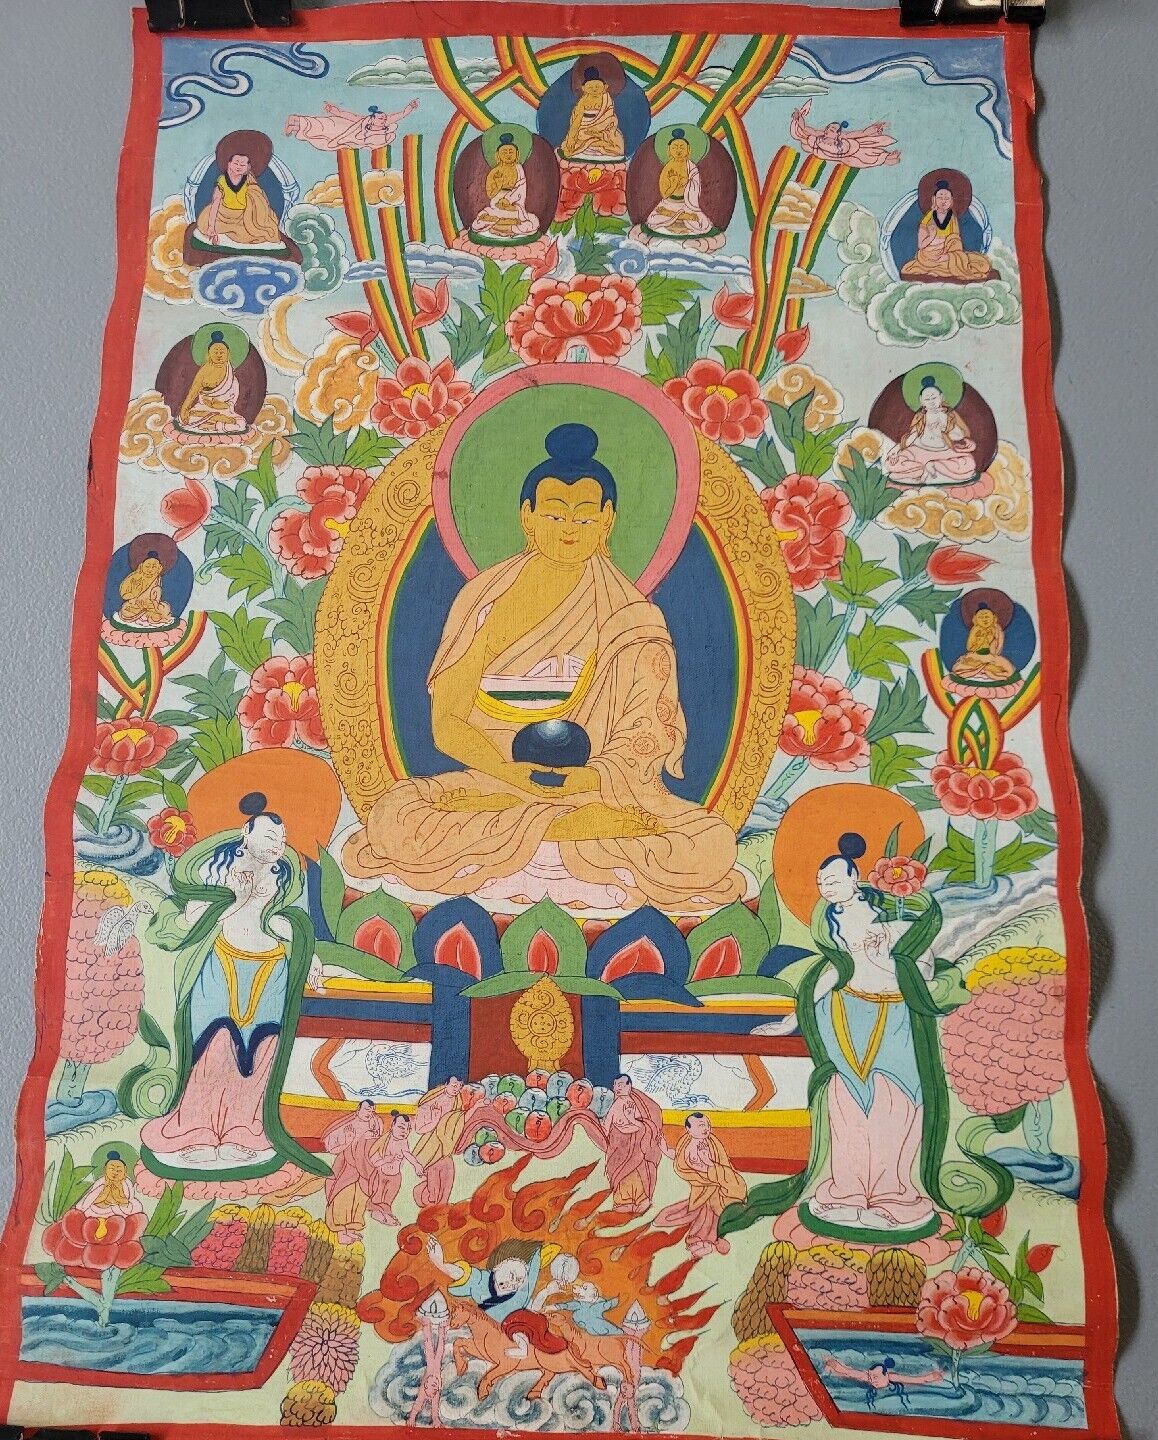 Shakyamuni Buddha Founder Buddhism Hand Painted Nepal Tibet Thangka/Thanka Art